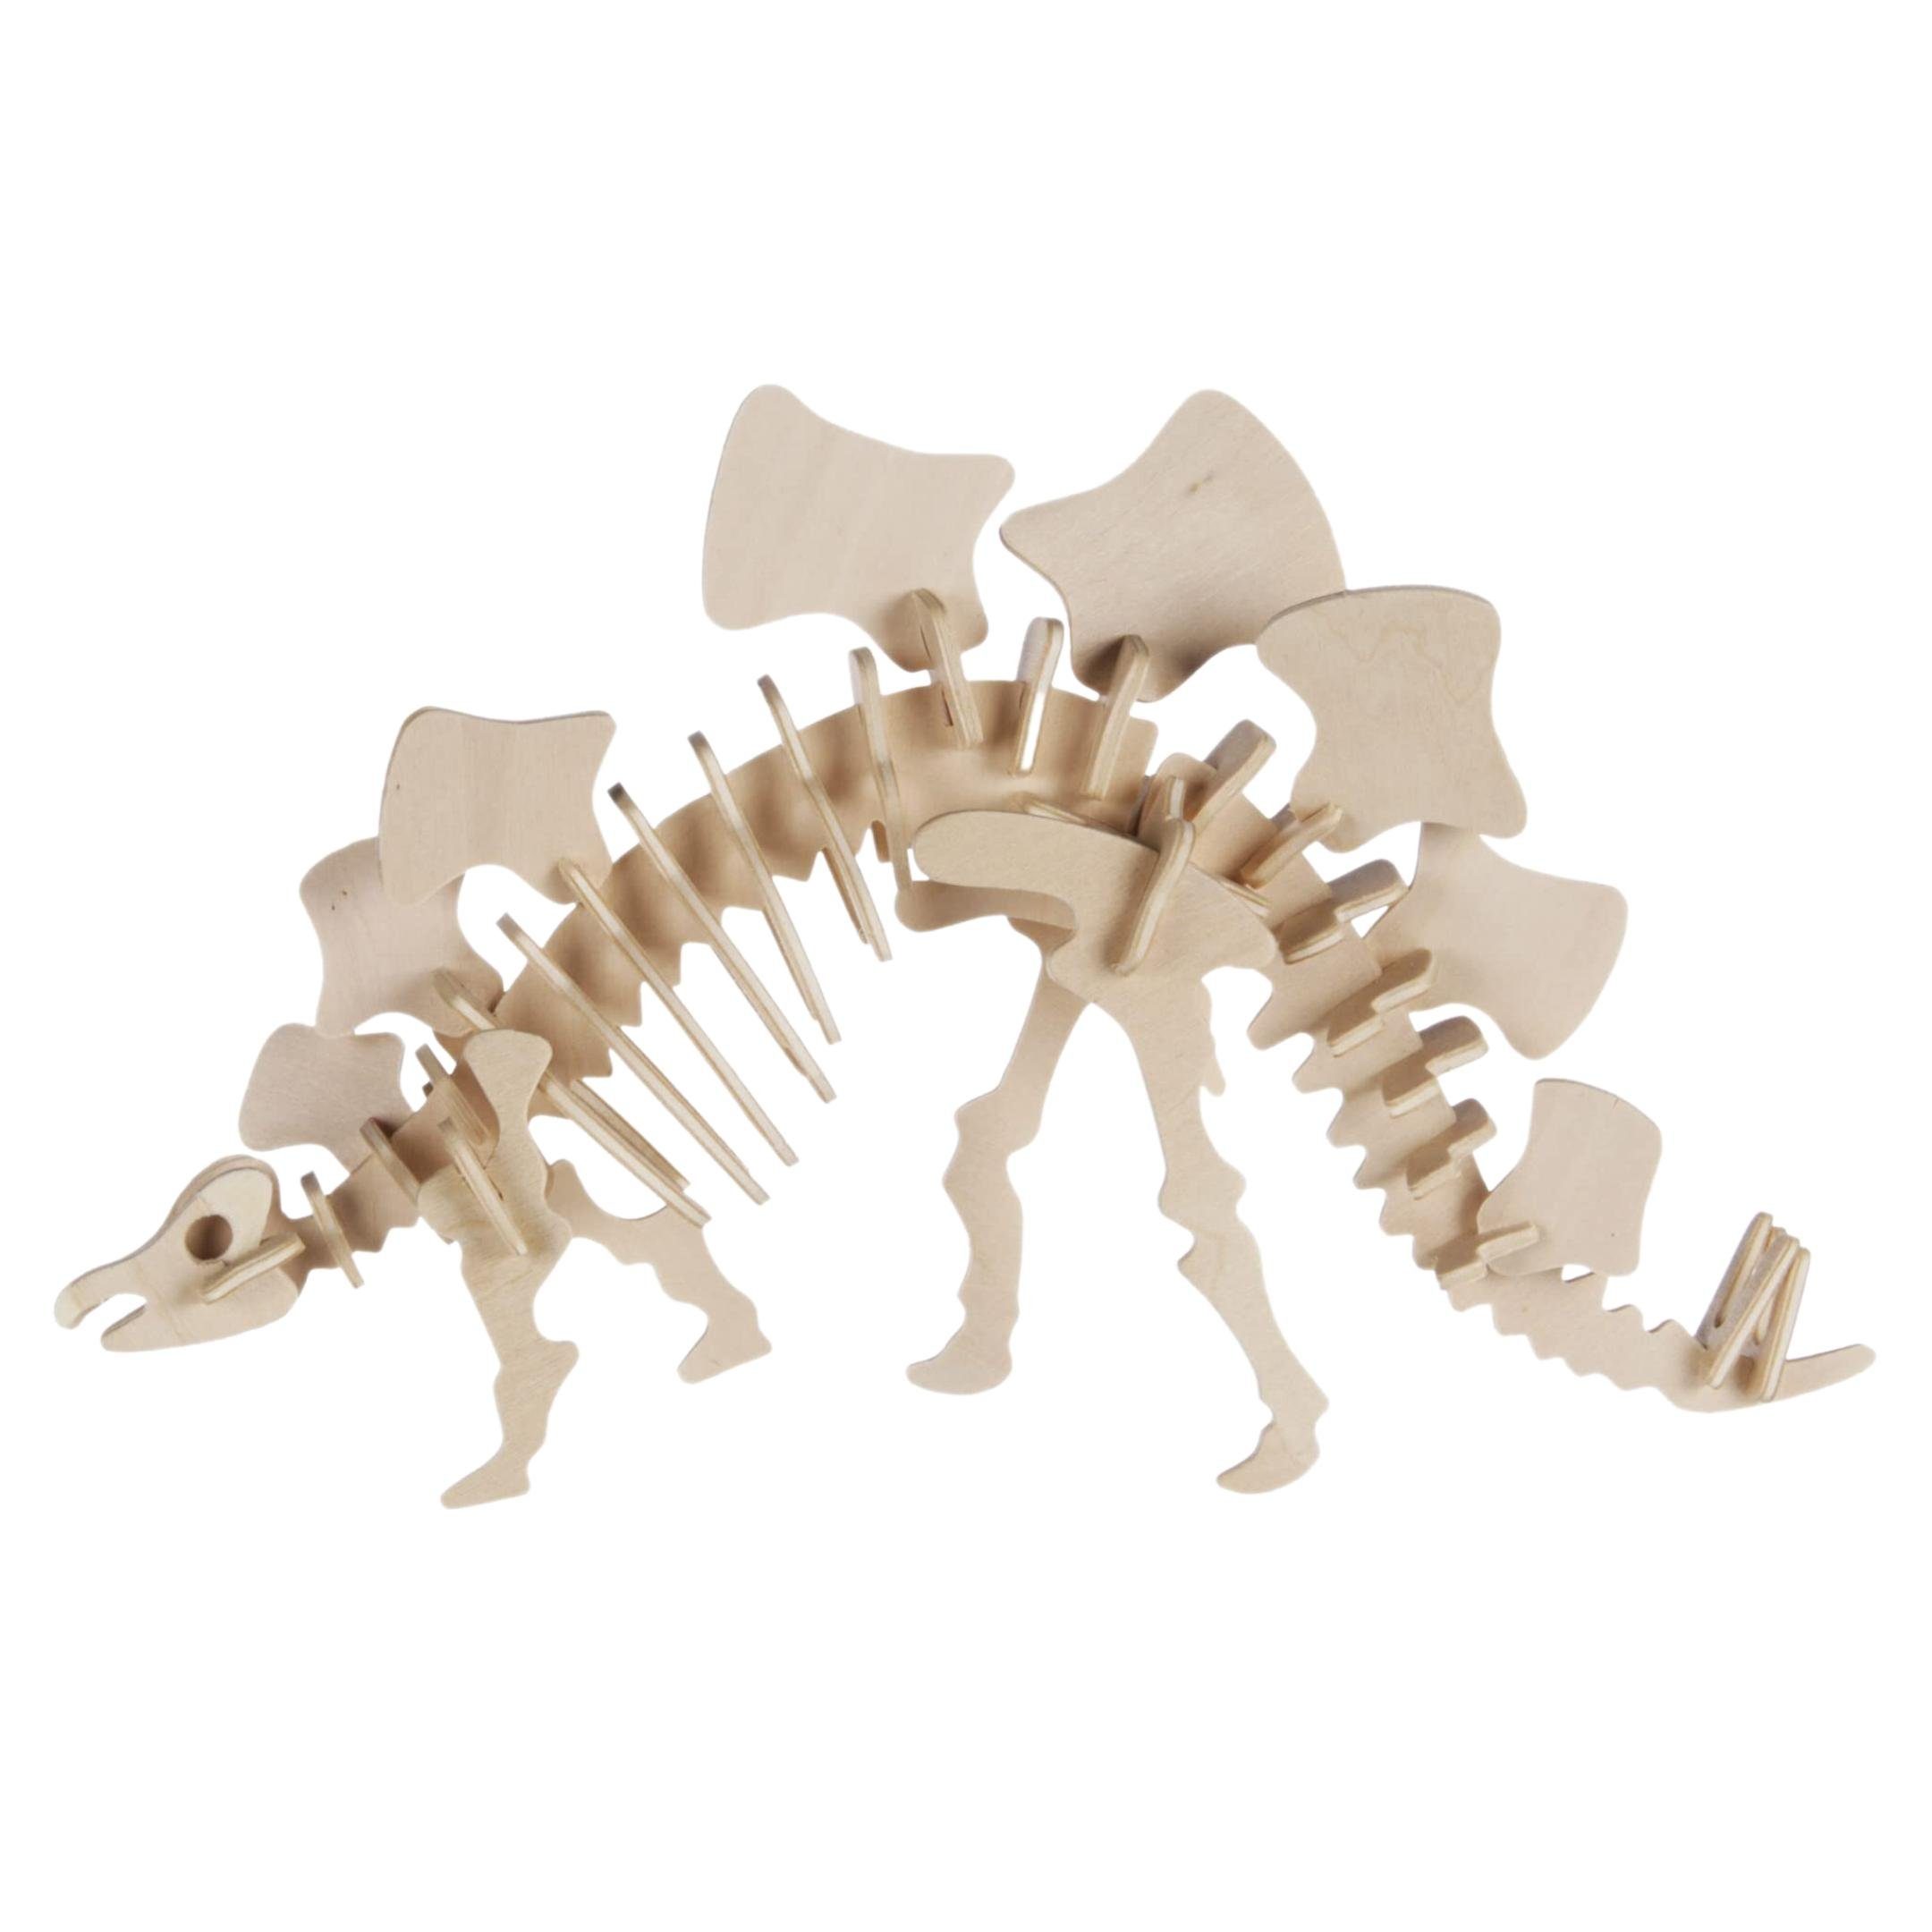 Bada Bing 3D-Puzzle 4er Set Dino Dinosaurier 3D Holzpuzzle Kinder 131 Puzzleteile Puzzle